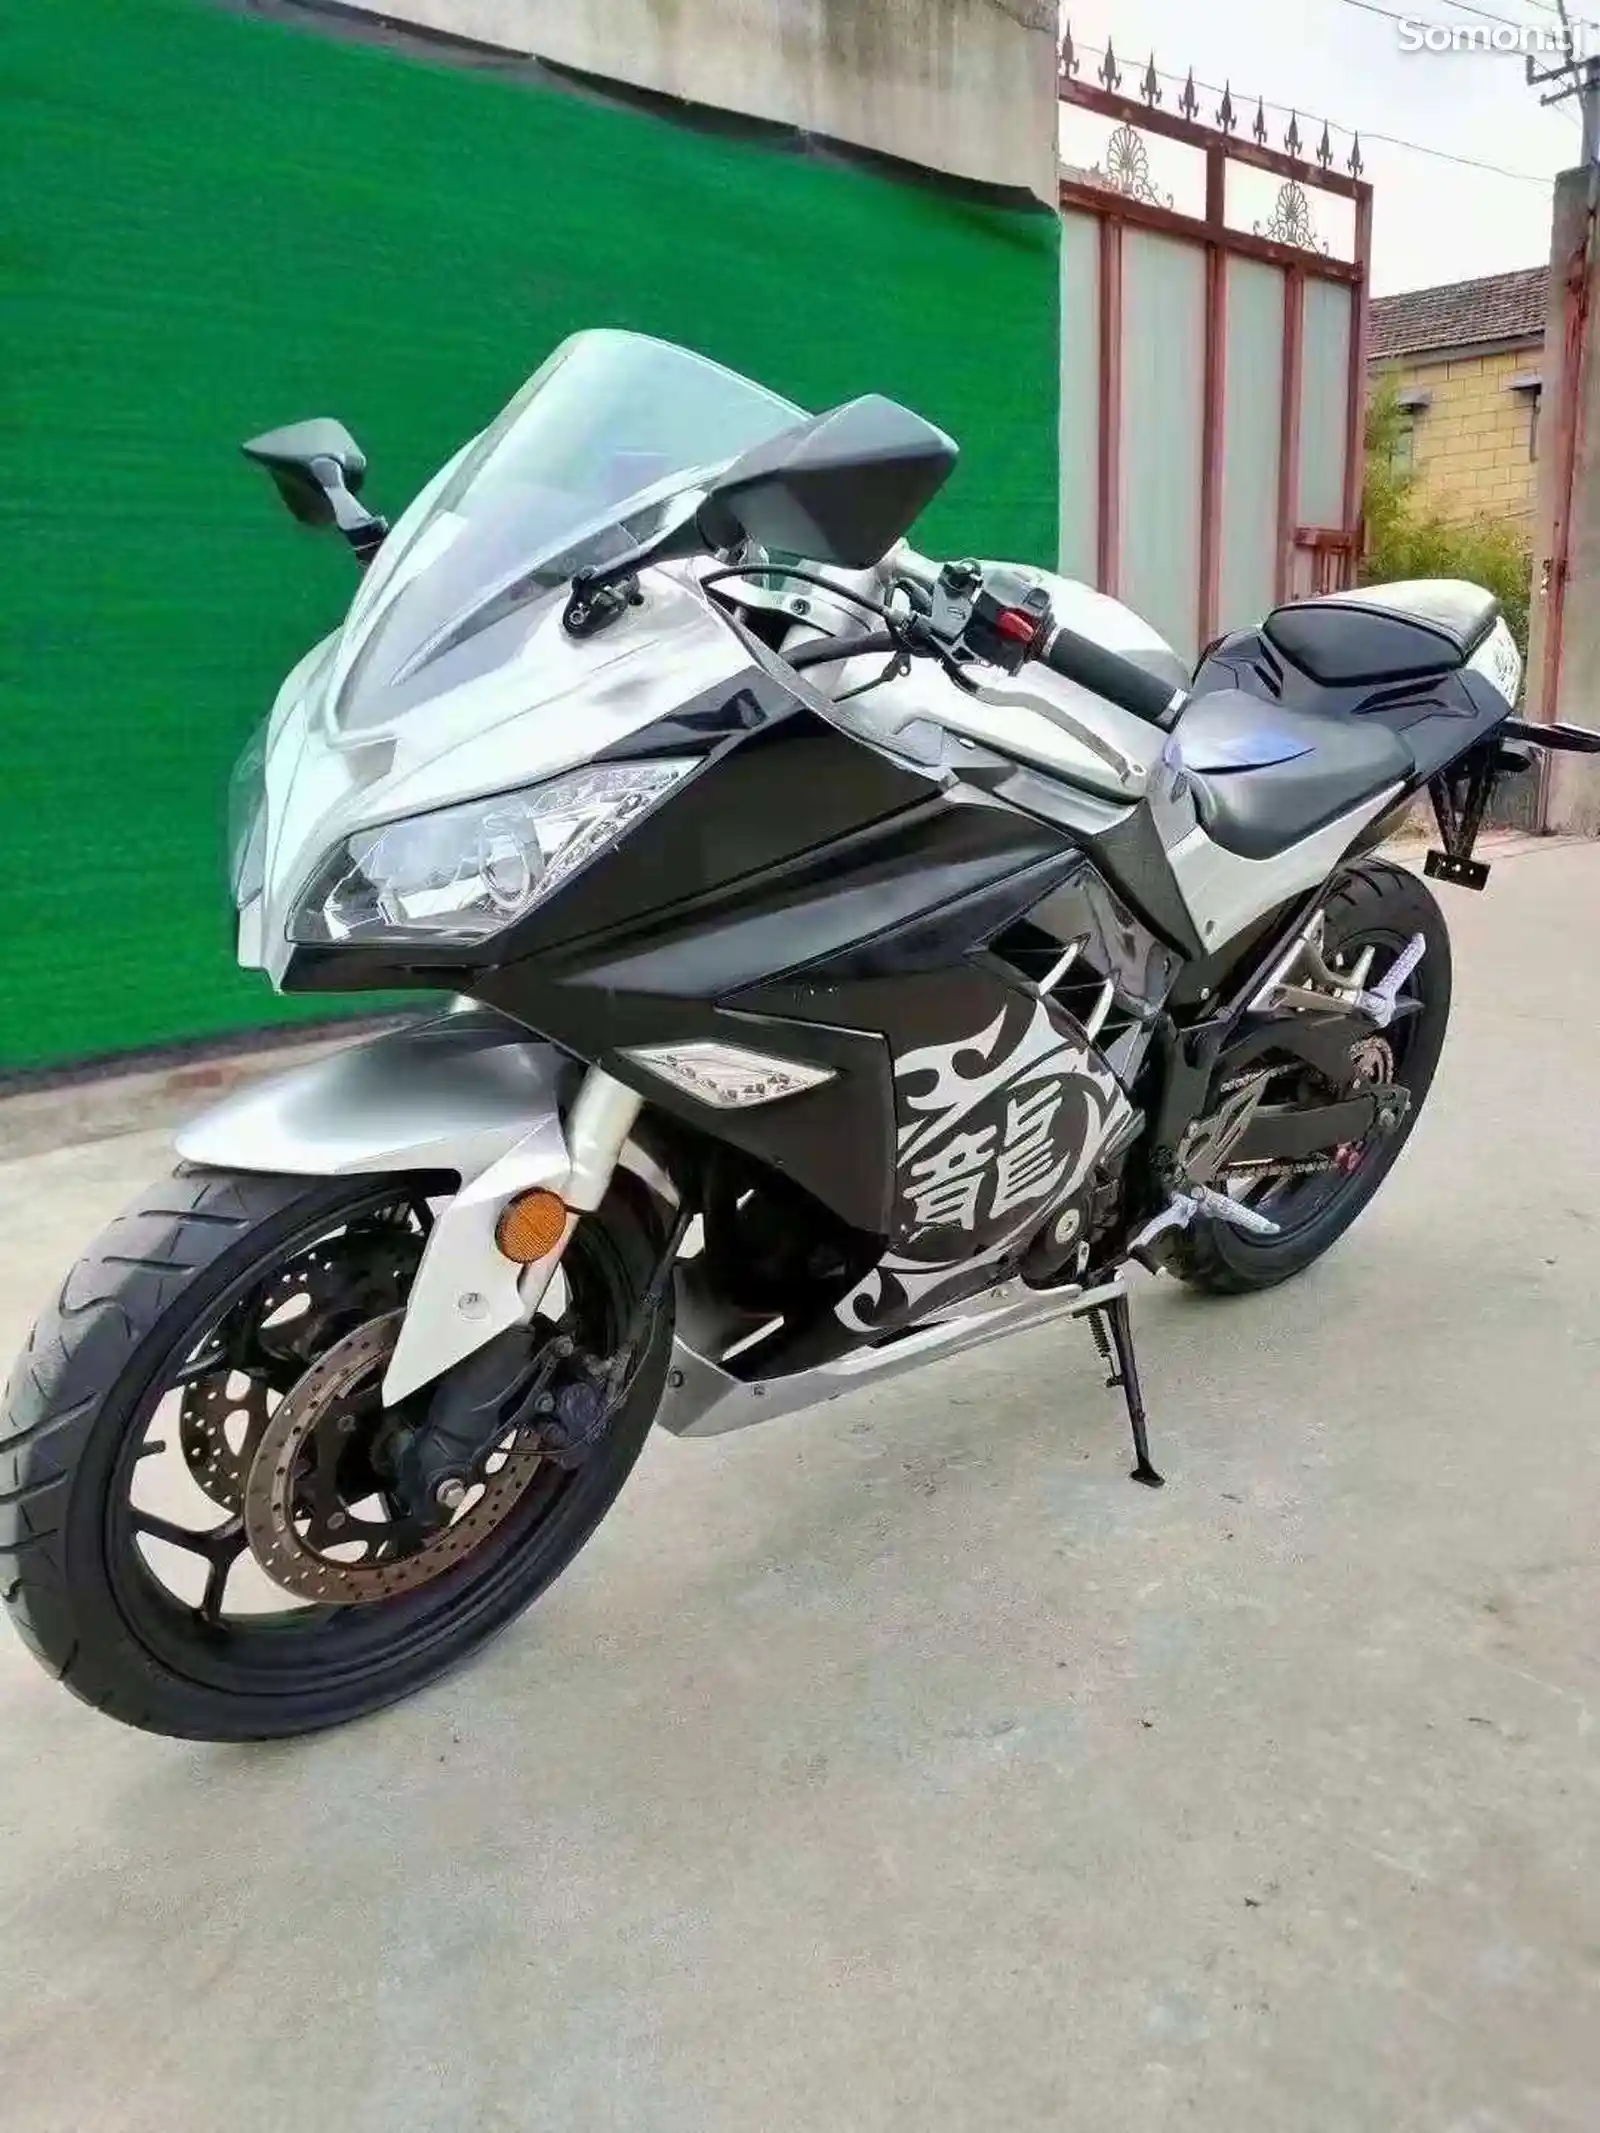 Мотойикл Kawasaki 400cc на заказ-2